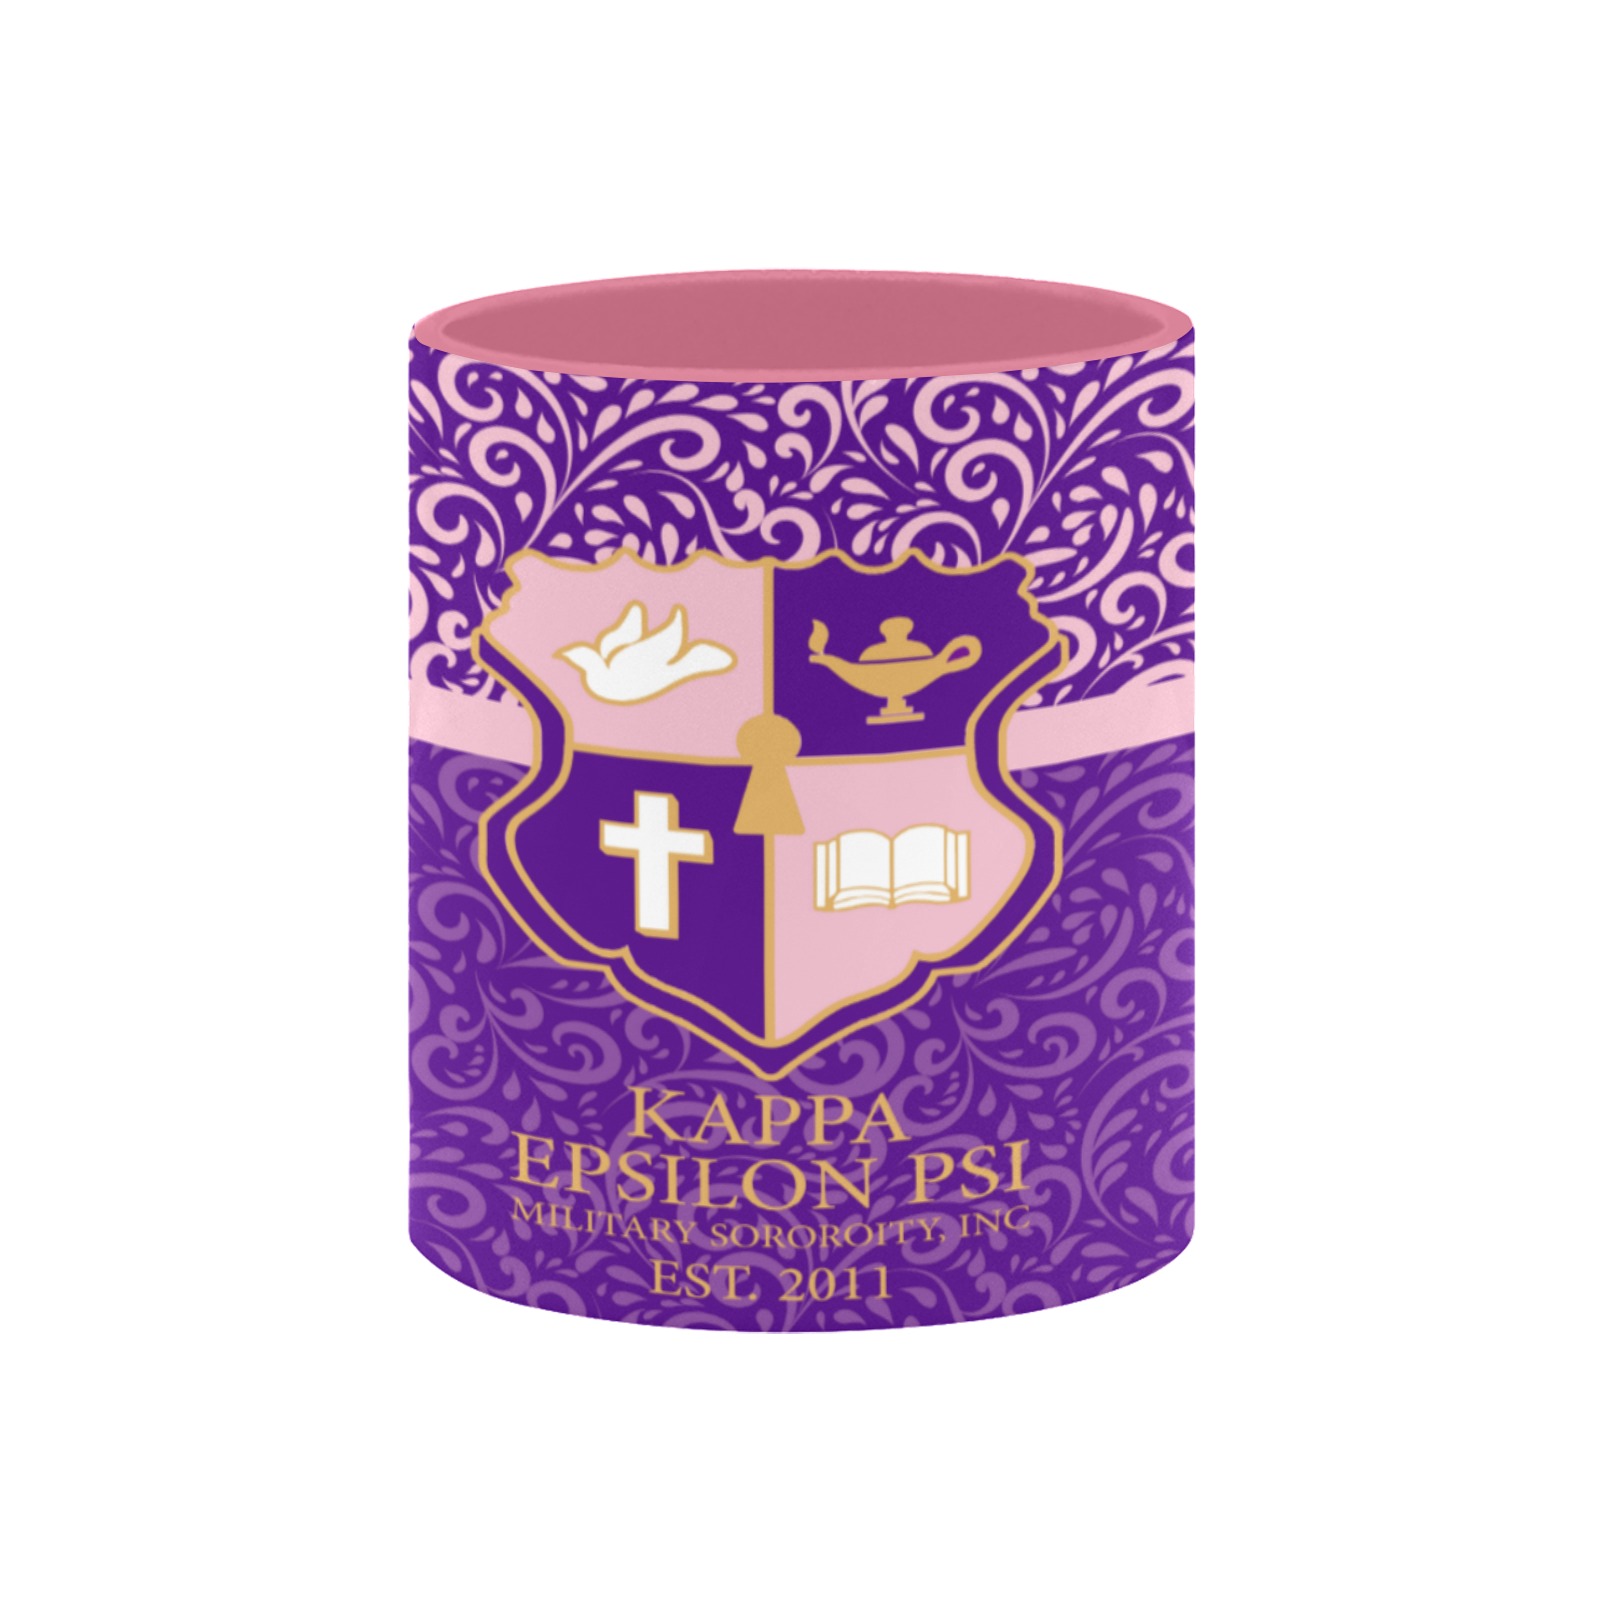 Decorative purple sorority tumbler with crest and symbols.